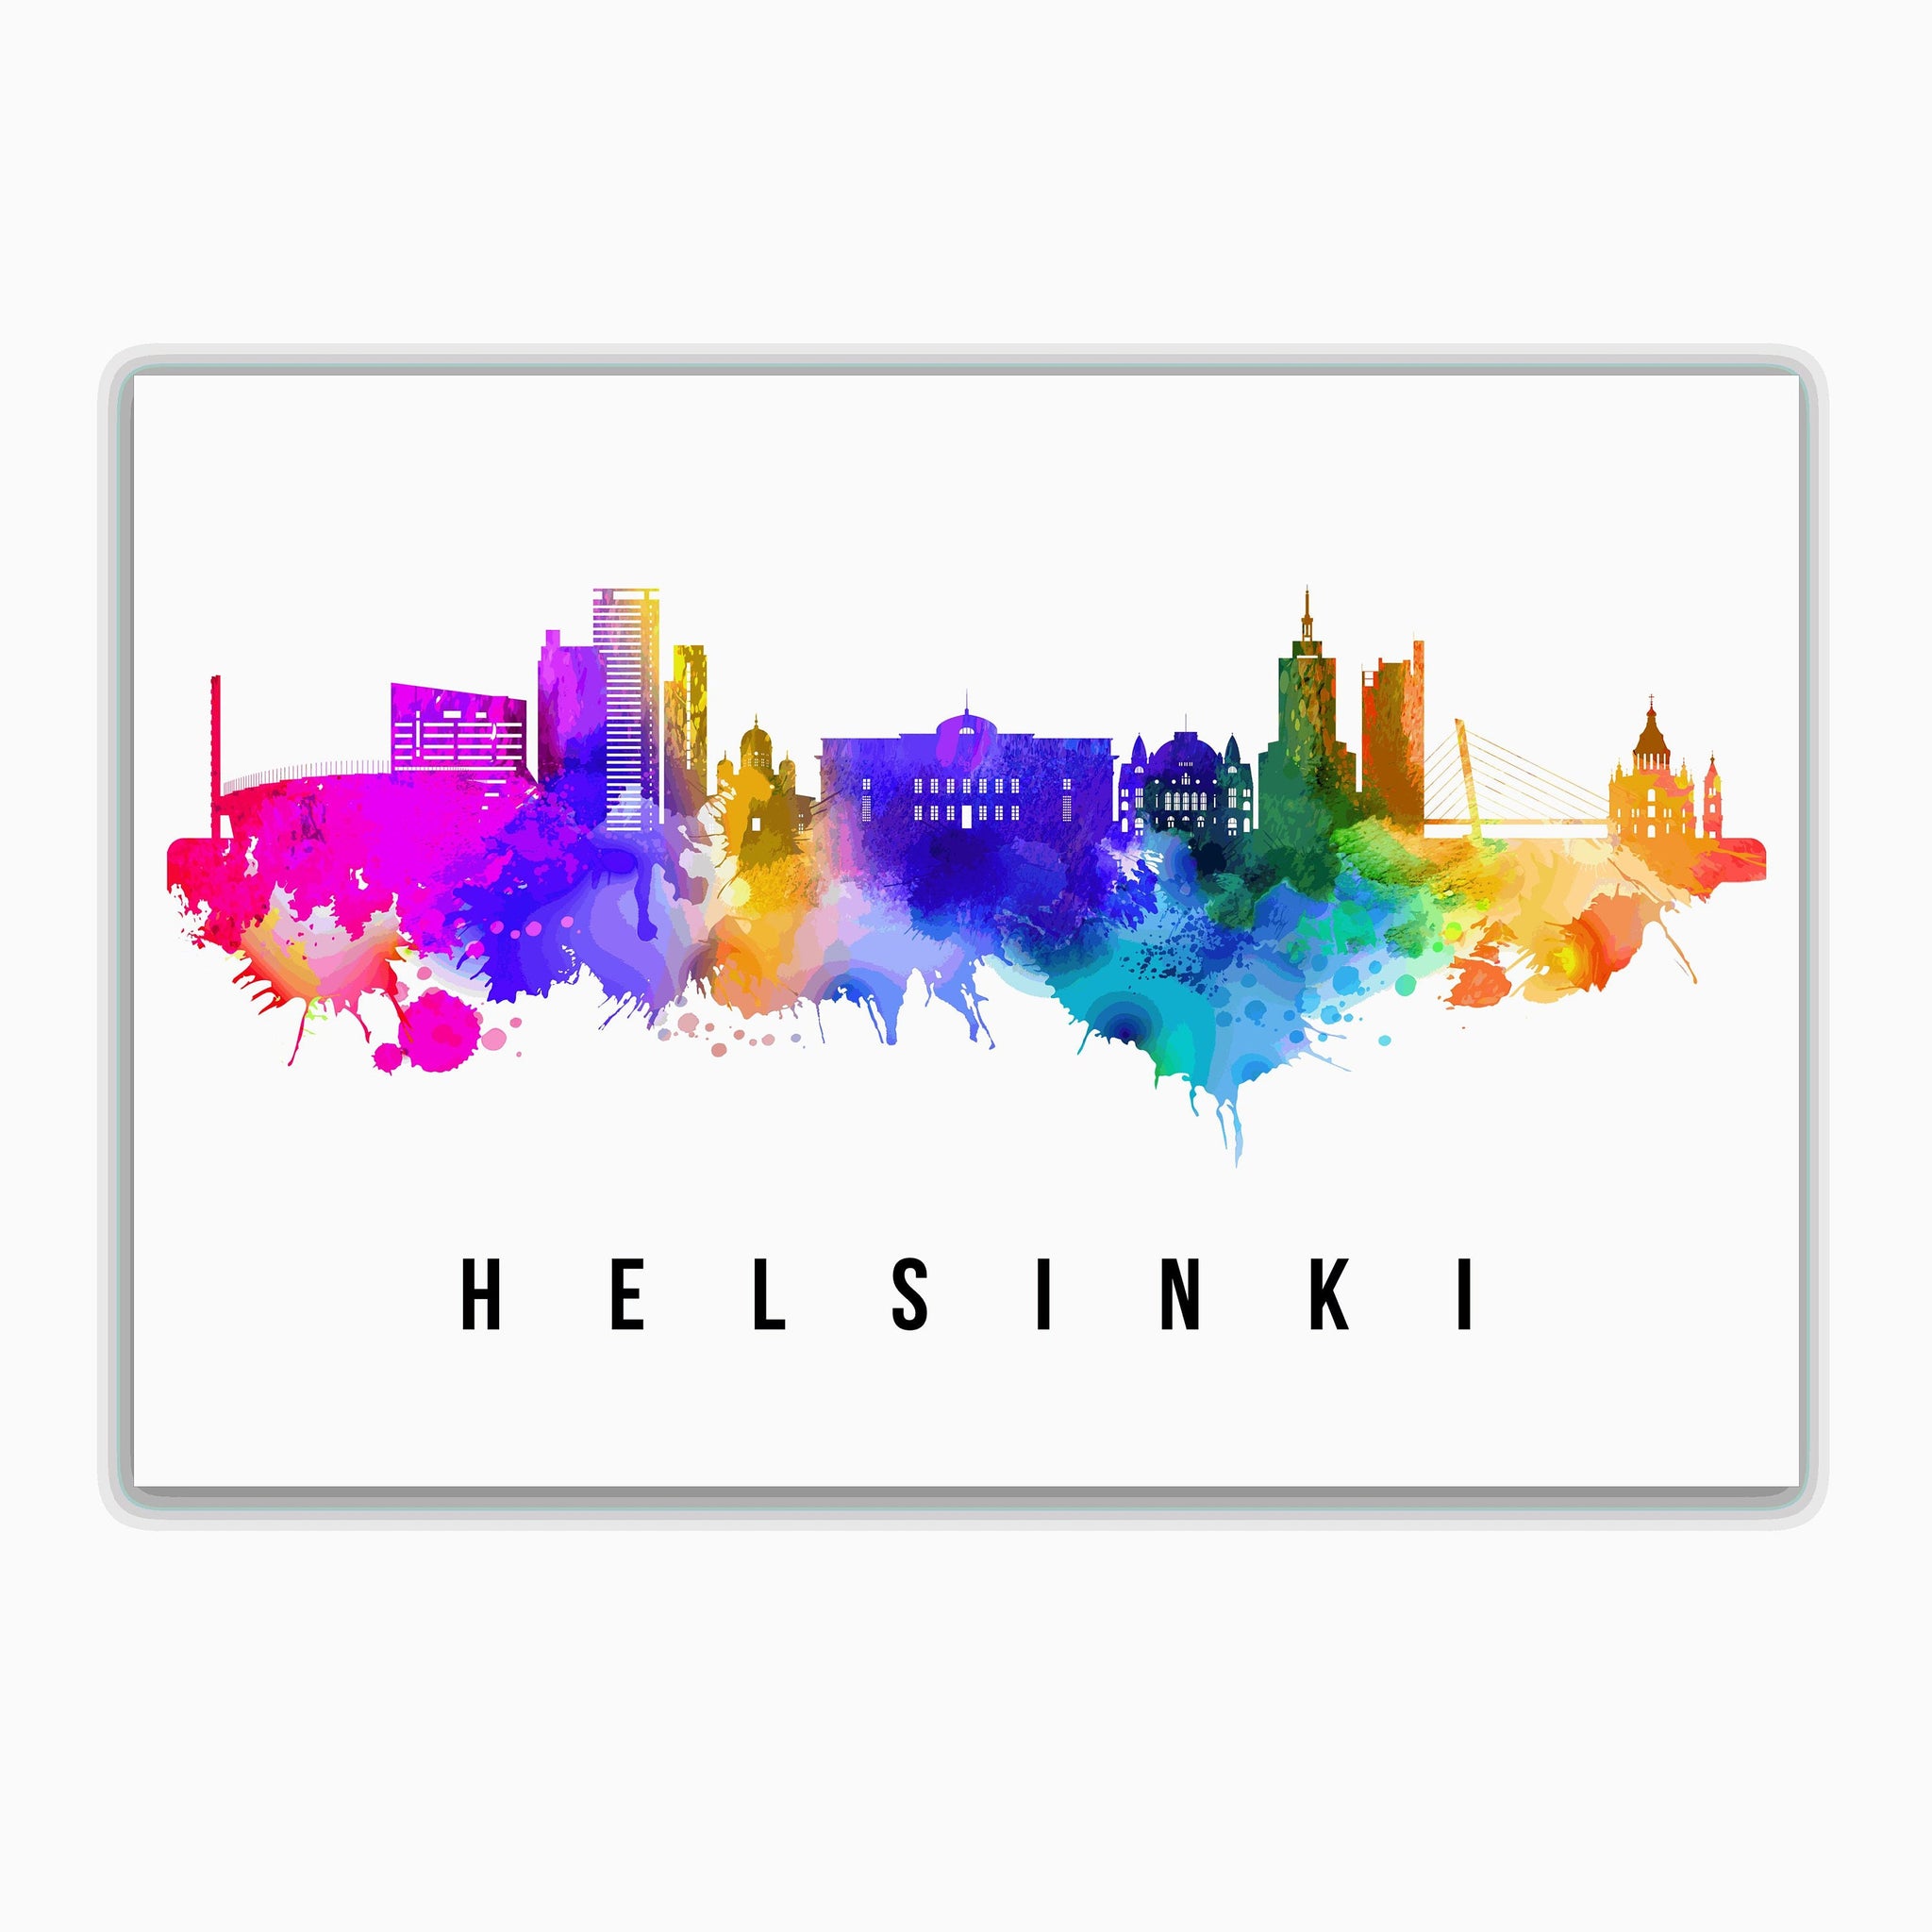 HELSINKI - FILAND Poster, Skyline Poster Cityscape and Landmark Helsinki City Illustration Home Wall Art, Office Decor